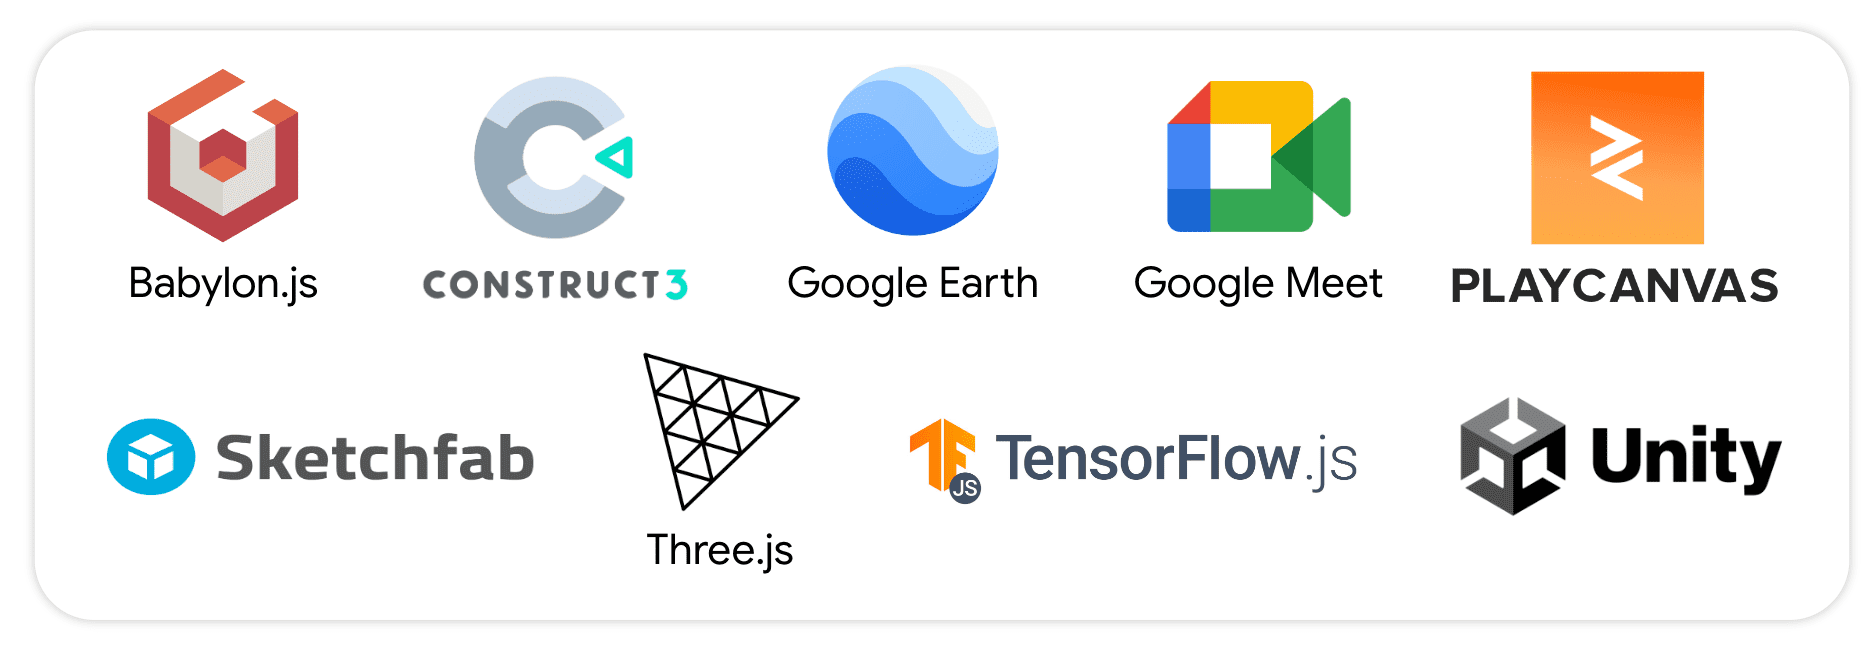 Babylon.js, Construct 3, Google Earth, Google Meet, PlayCanvas, Sketchfab, Three.JS, TensorFlow.js, and Unity.